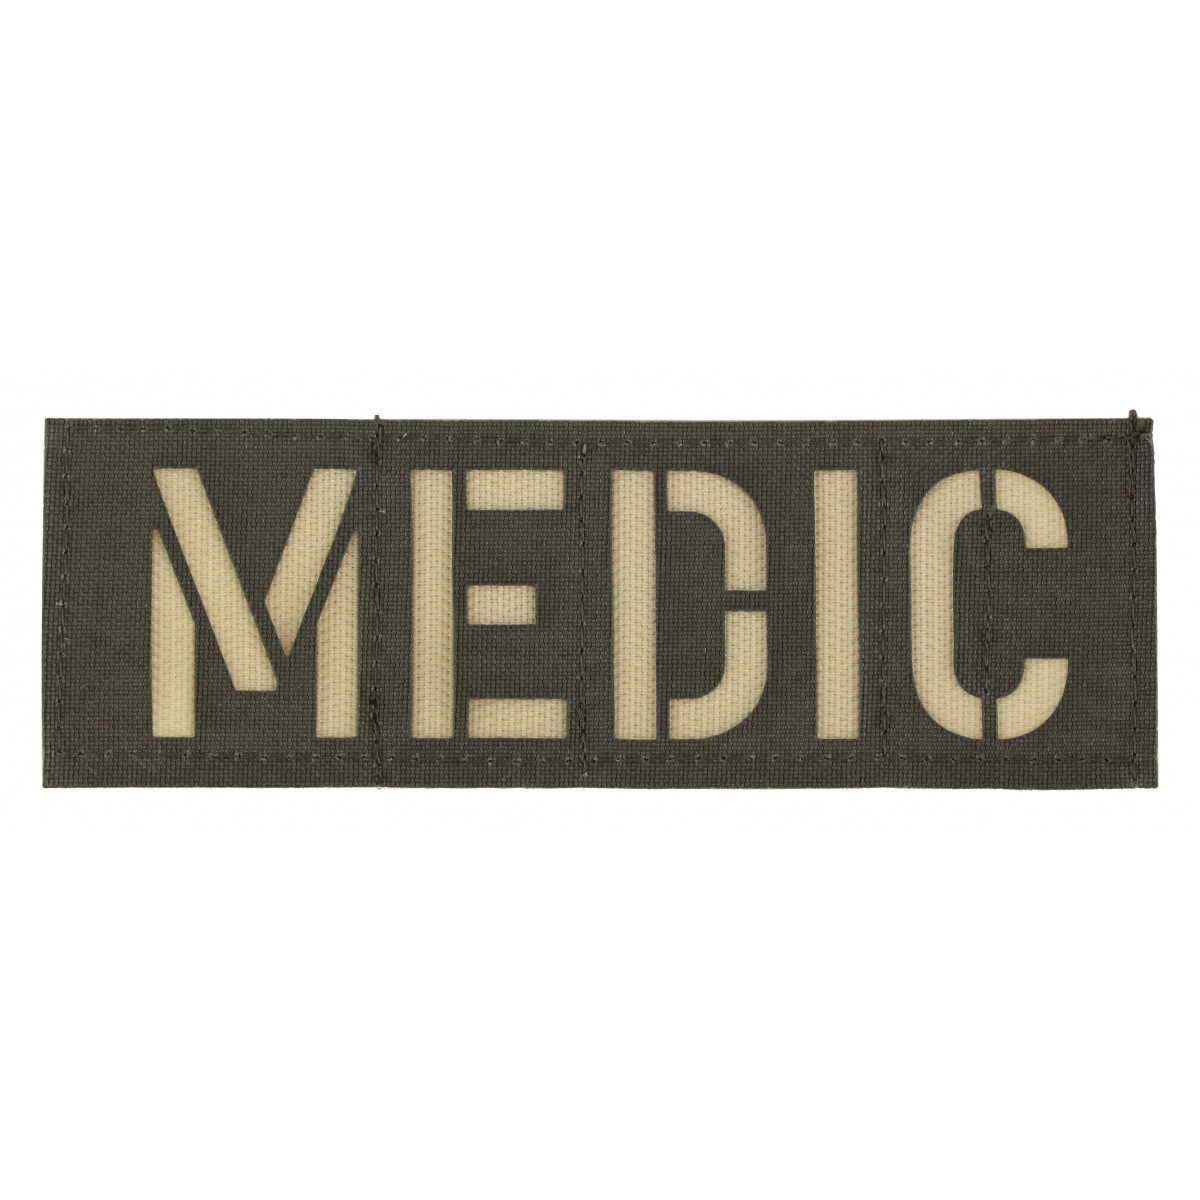 MEDIC Patch